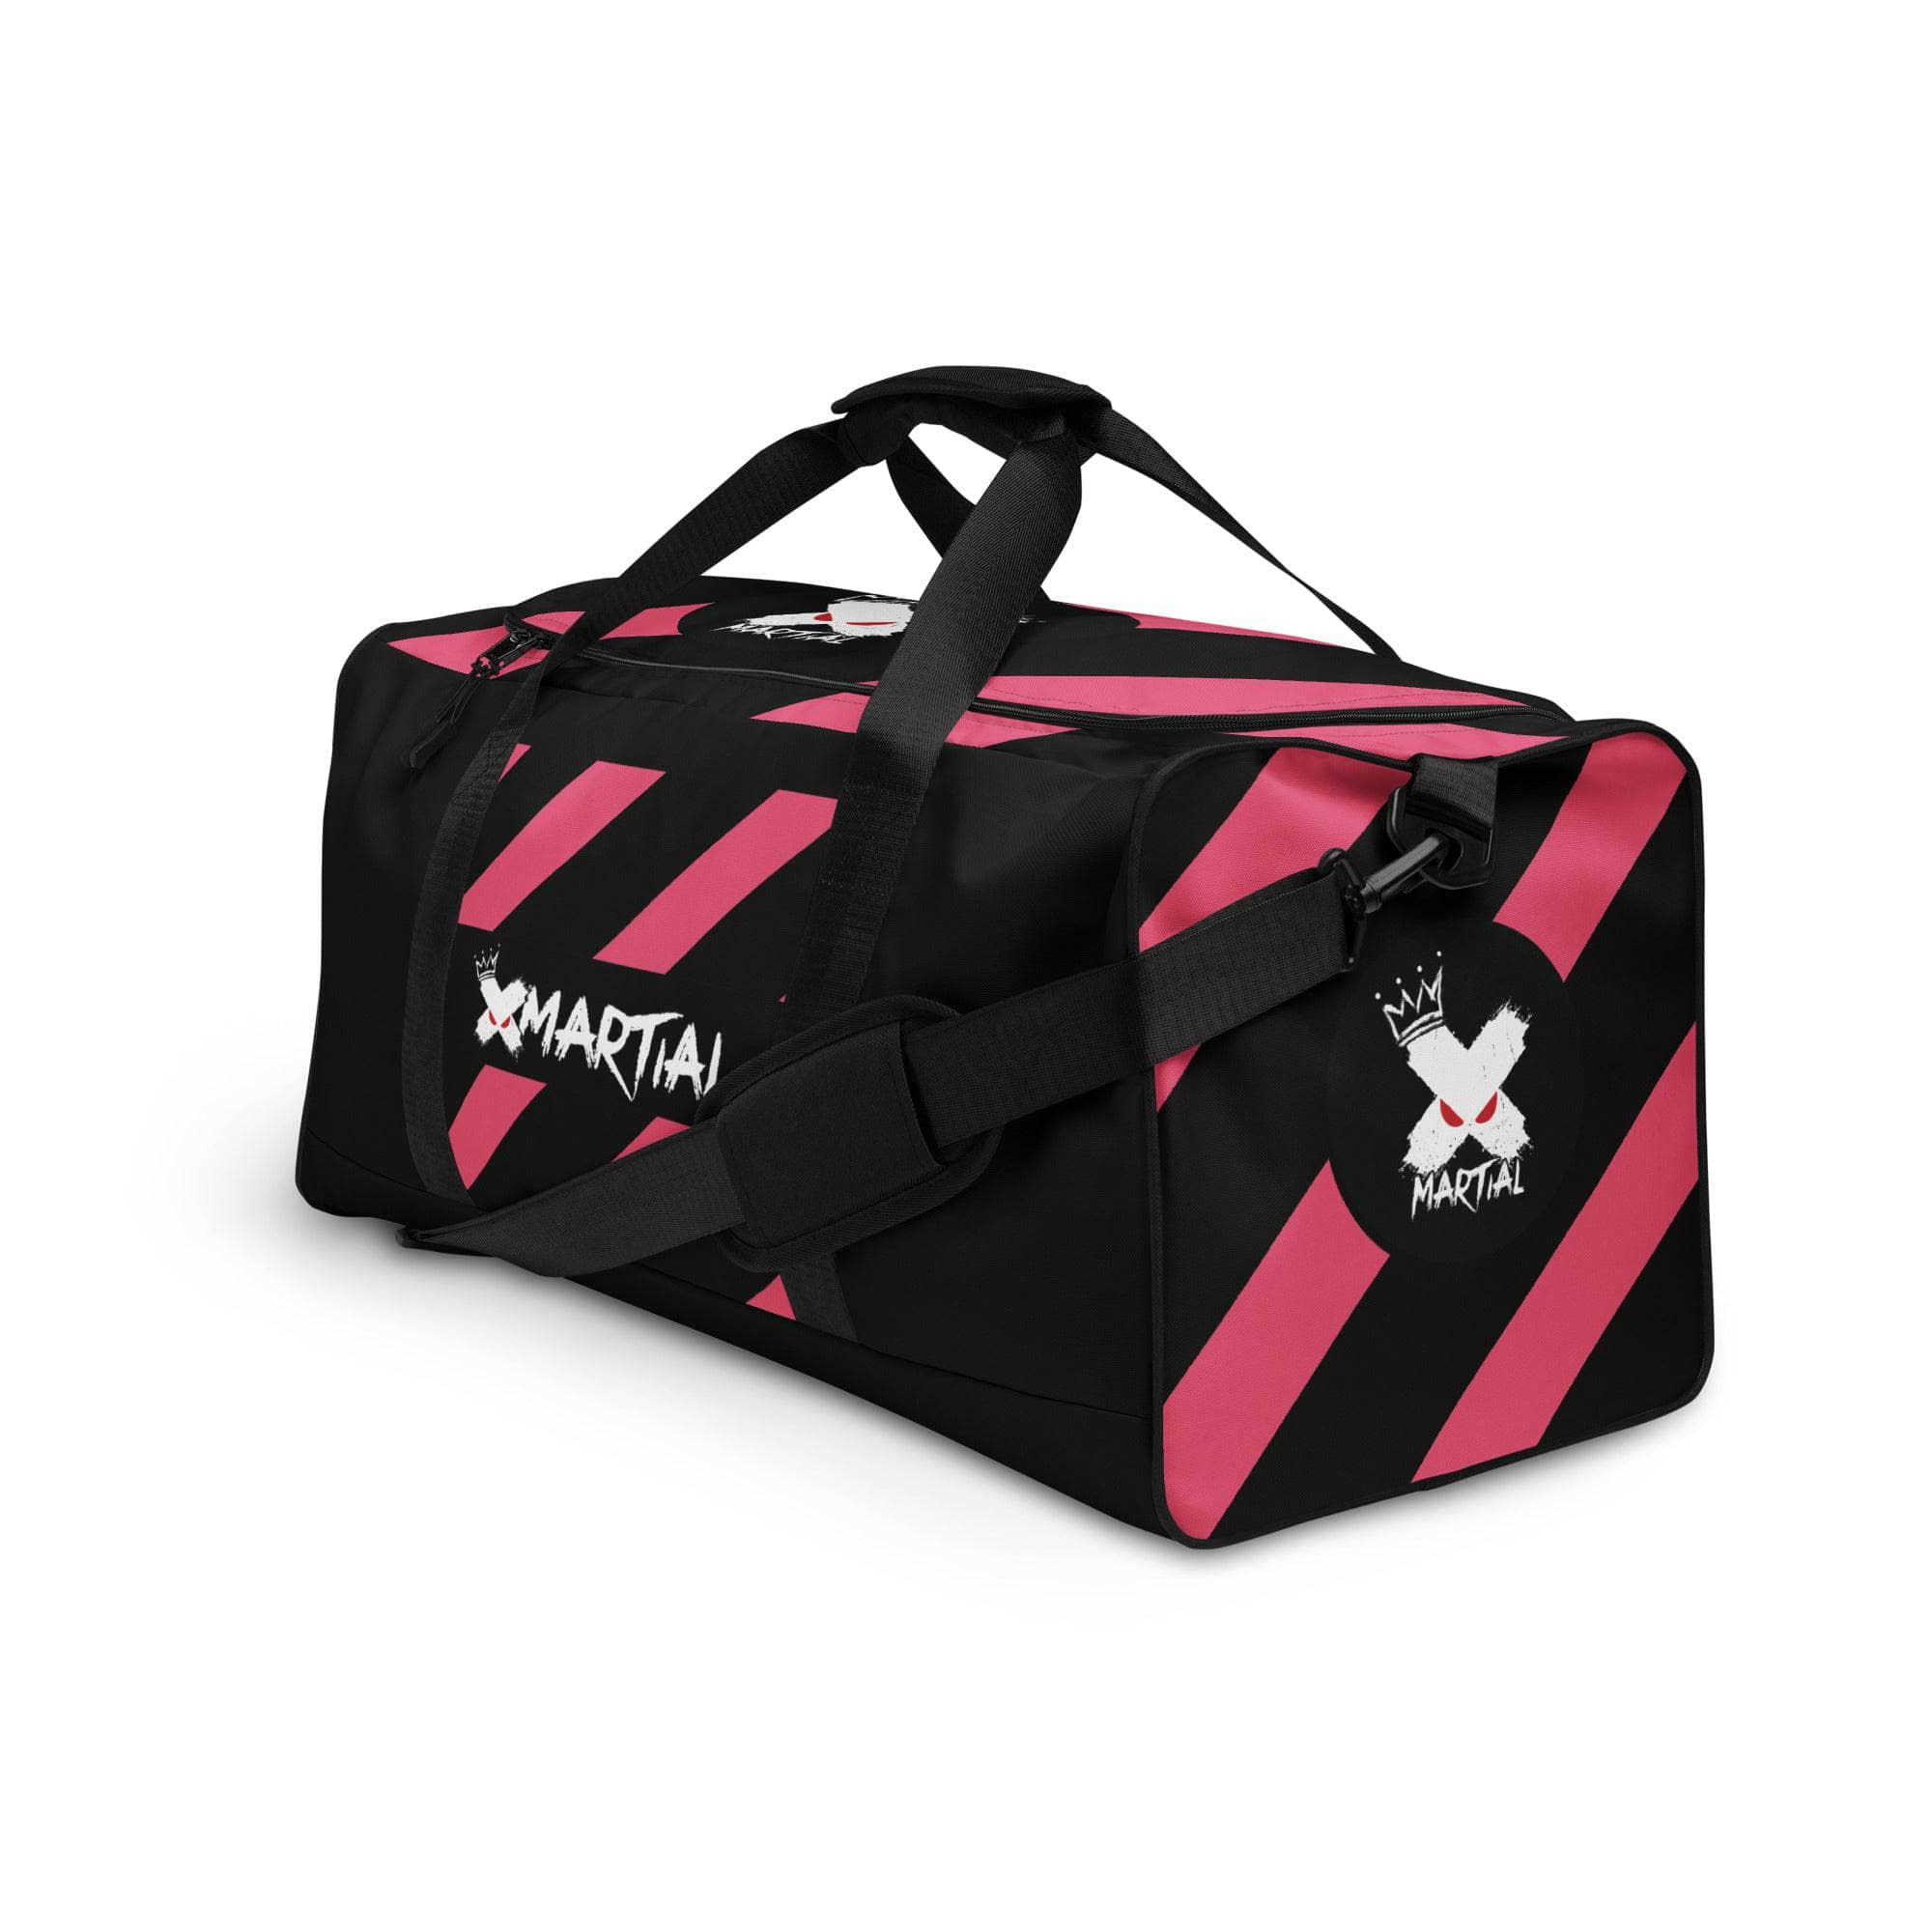 XMartial Pink Training Duffle Bag XMARTIAL